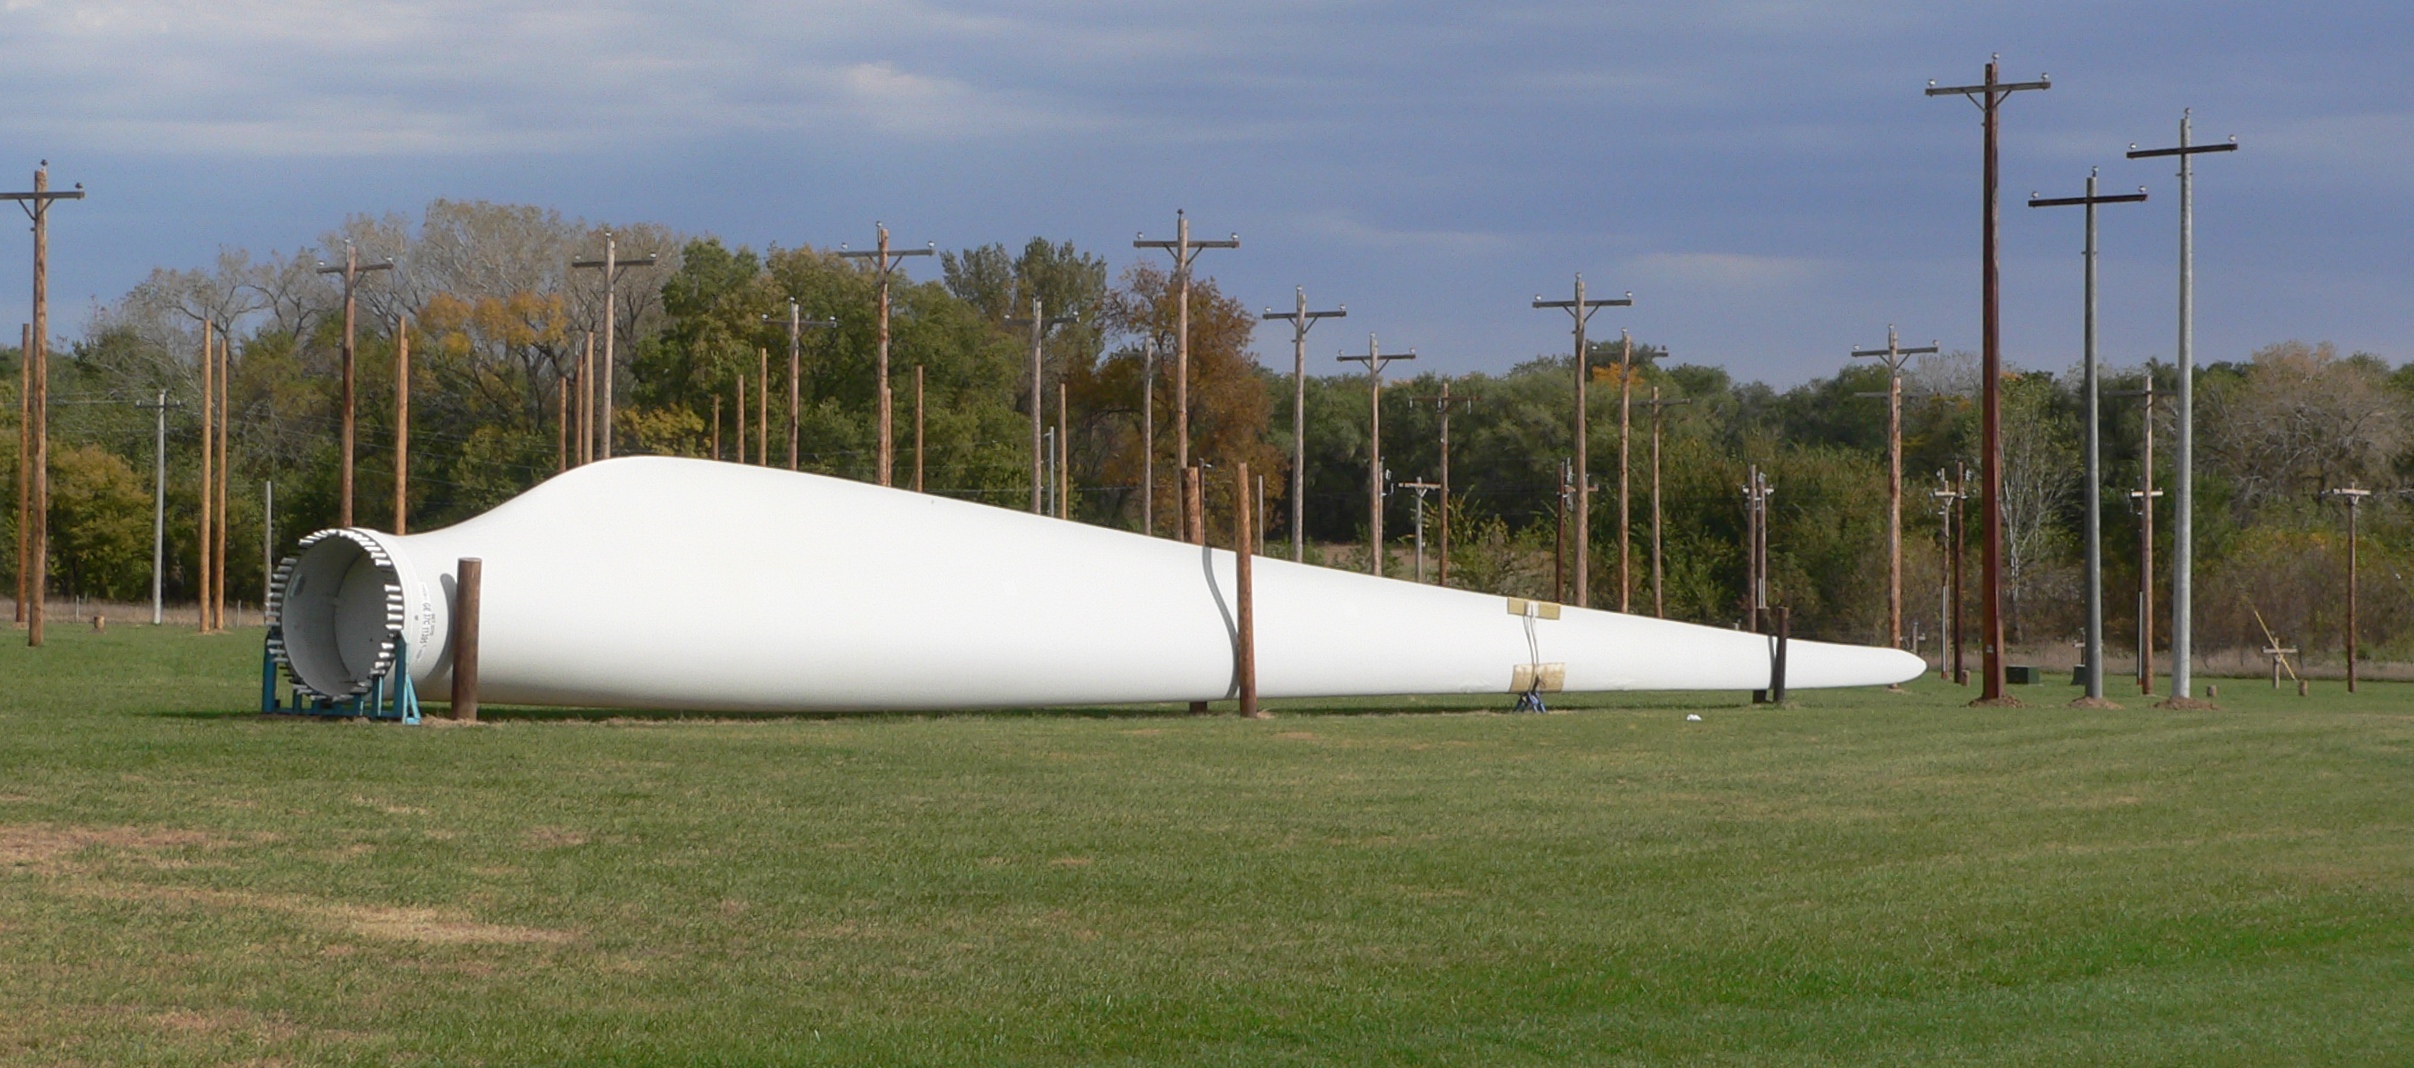 Wind turbine blade on the ground